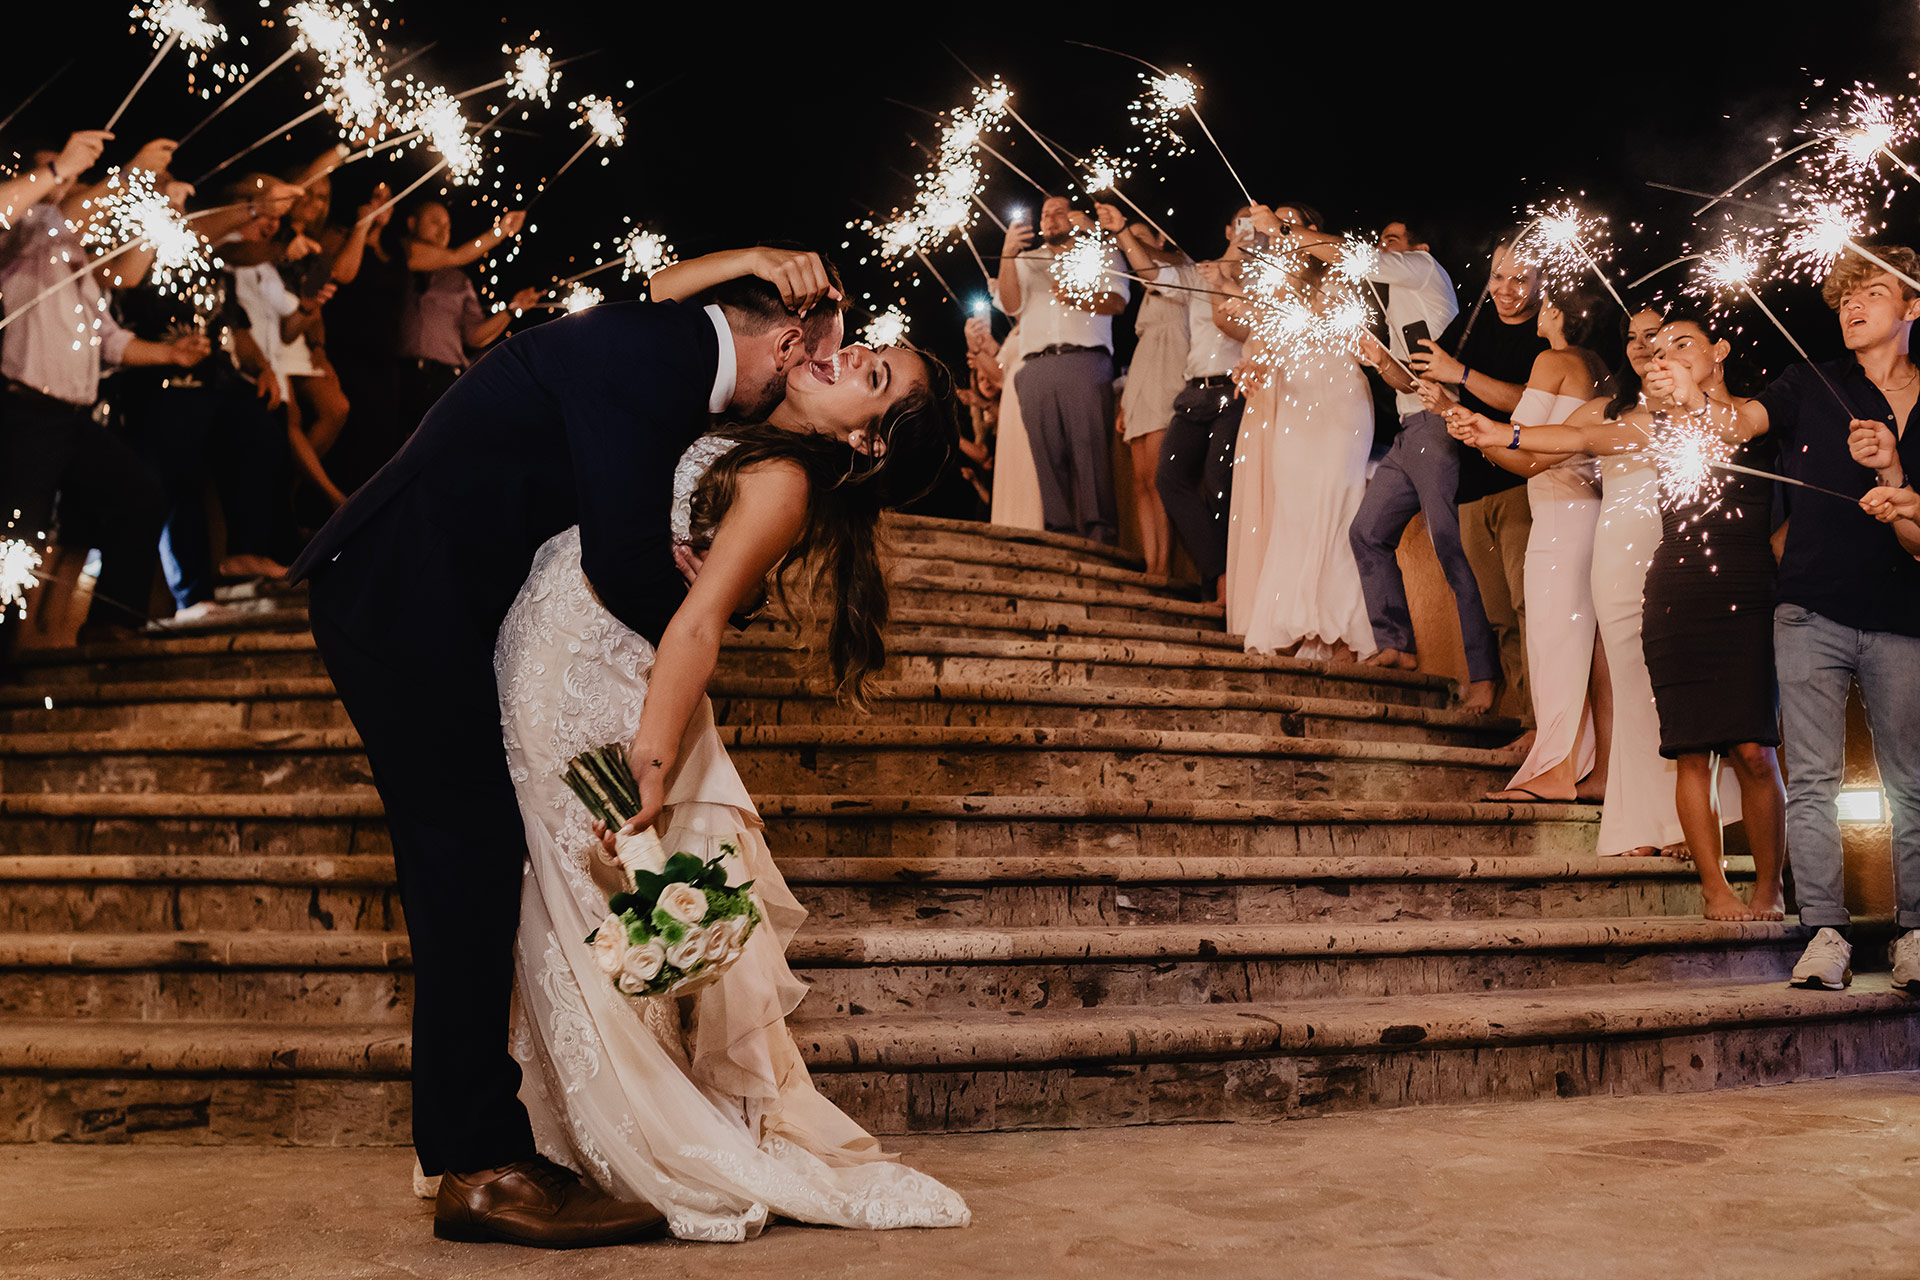 Sparklers at a Wedding at Sandos Finisterra